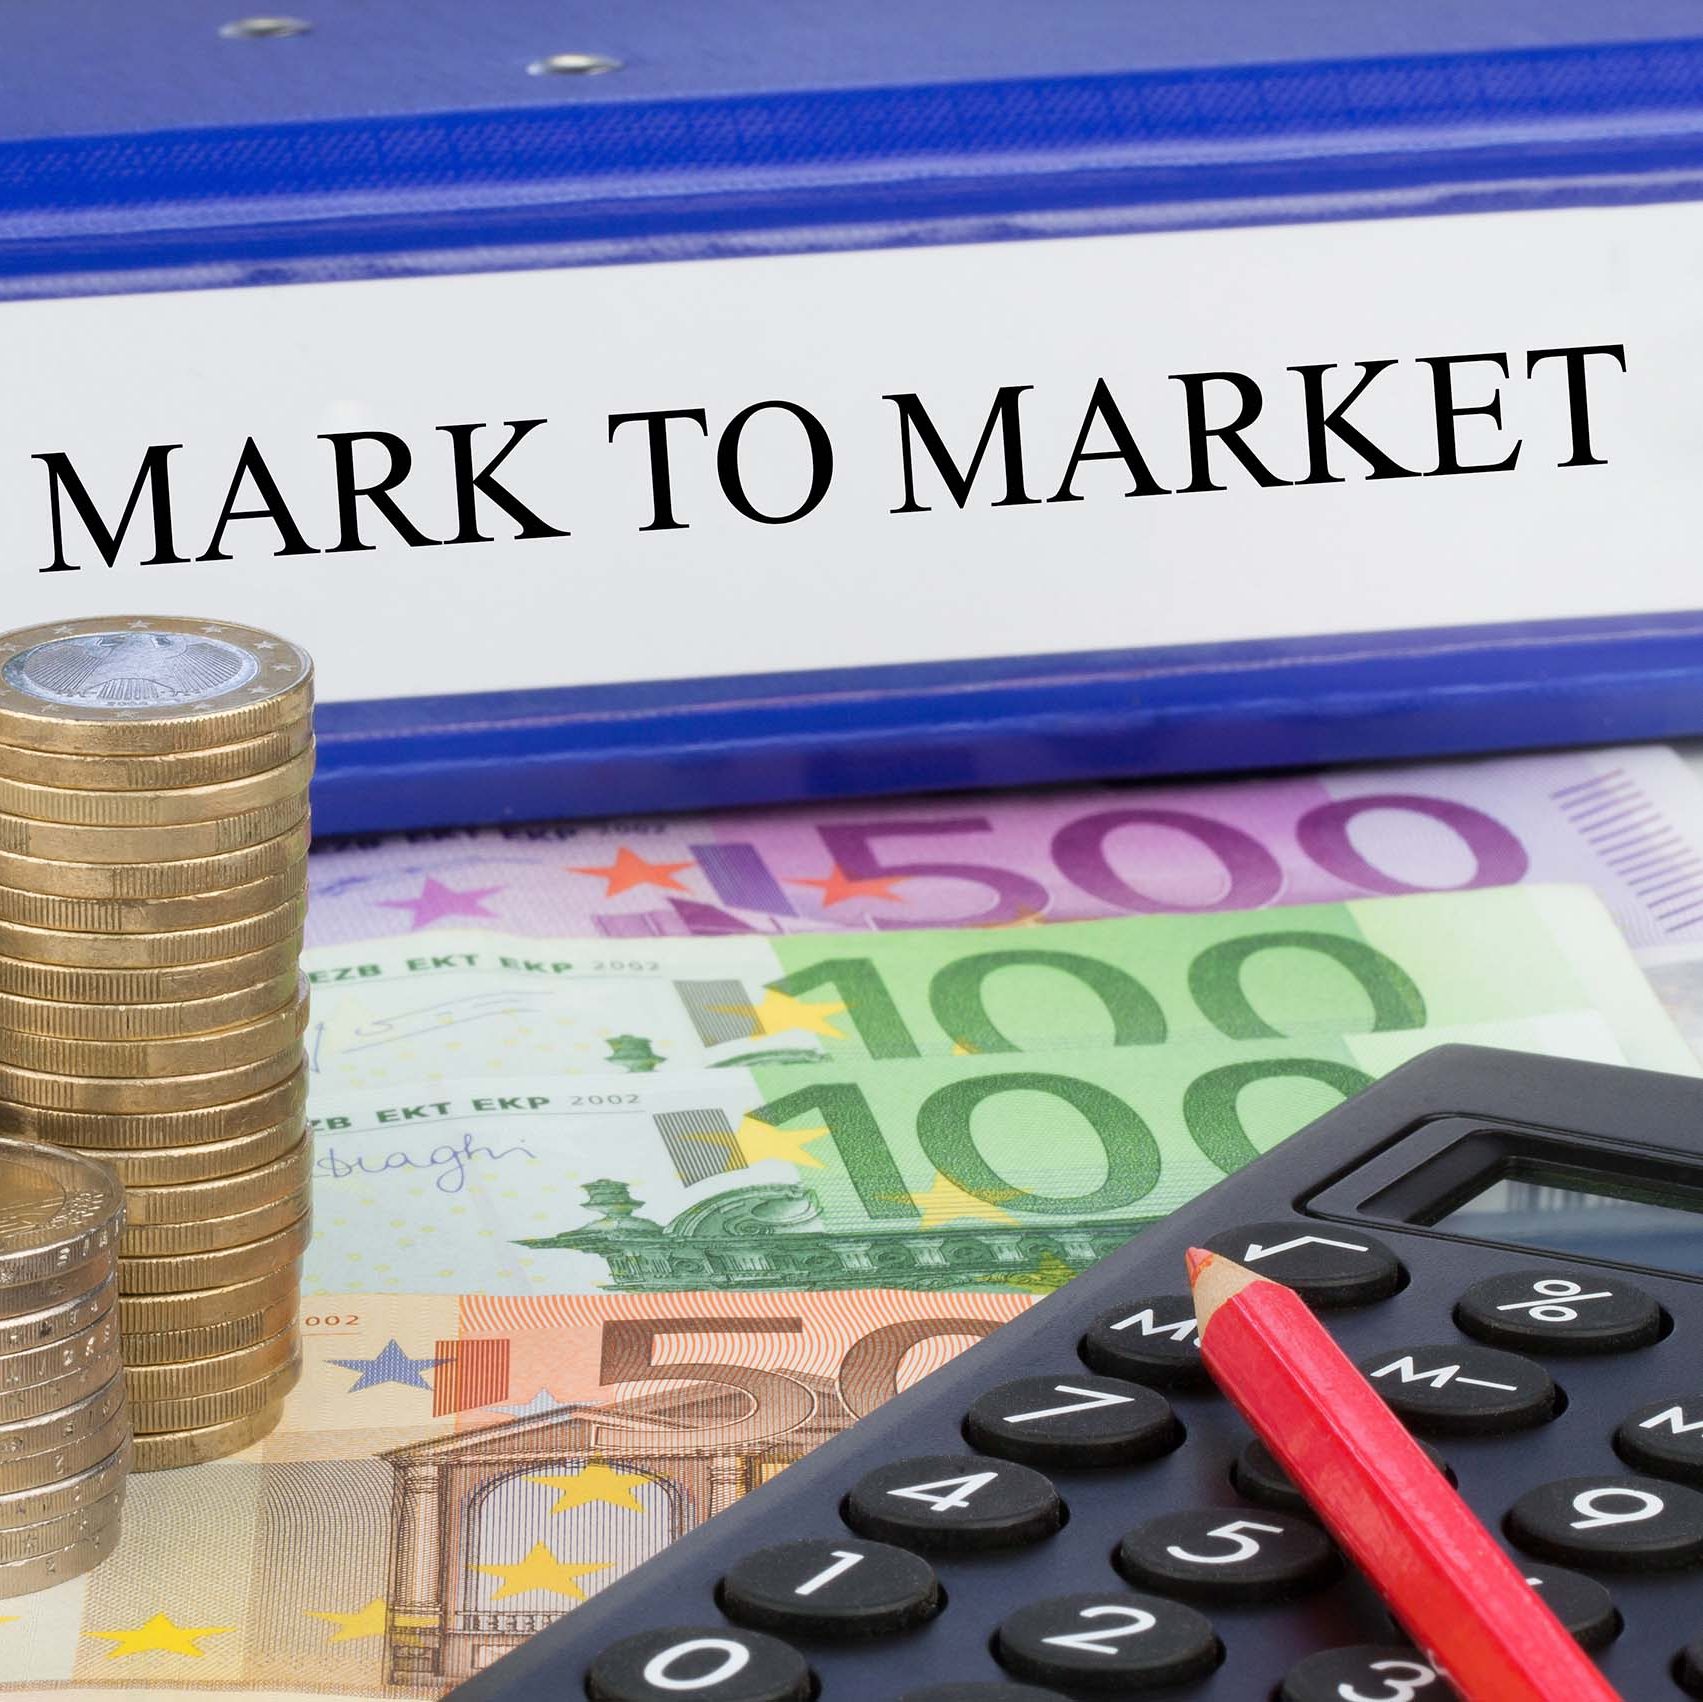 Mark to Market accounting